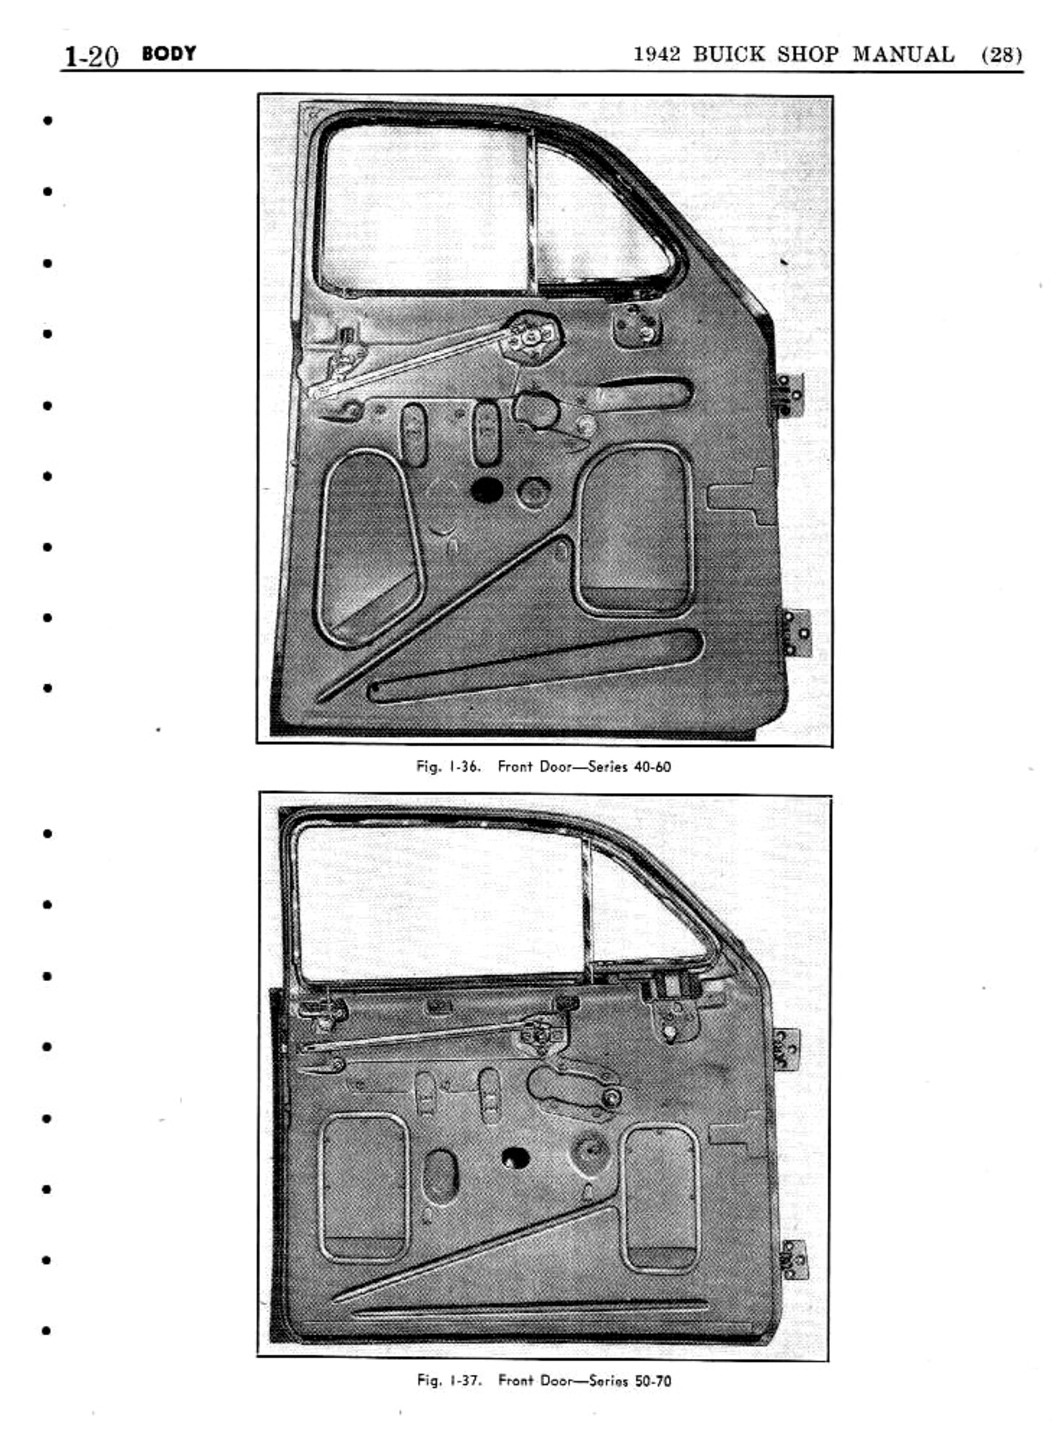 n_02 1942 Buick Shop Manual - Body-020-020.jpg